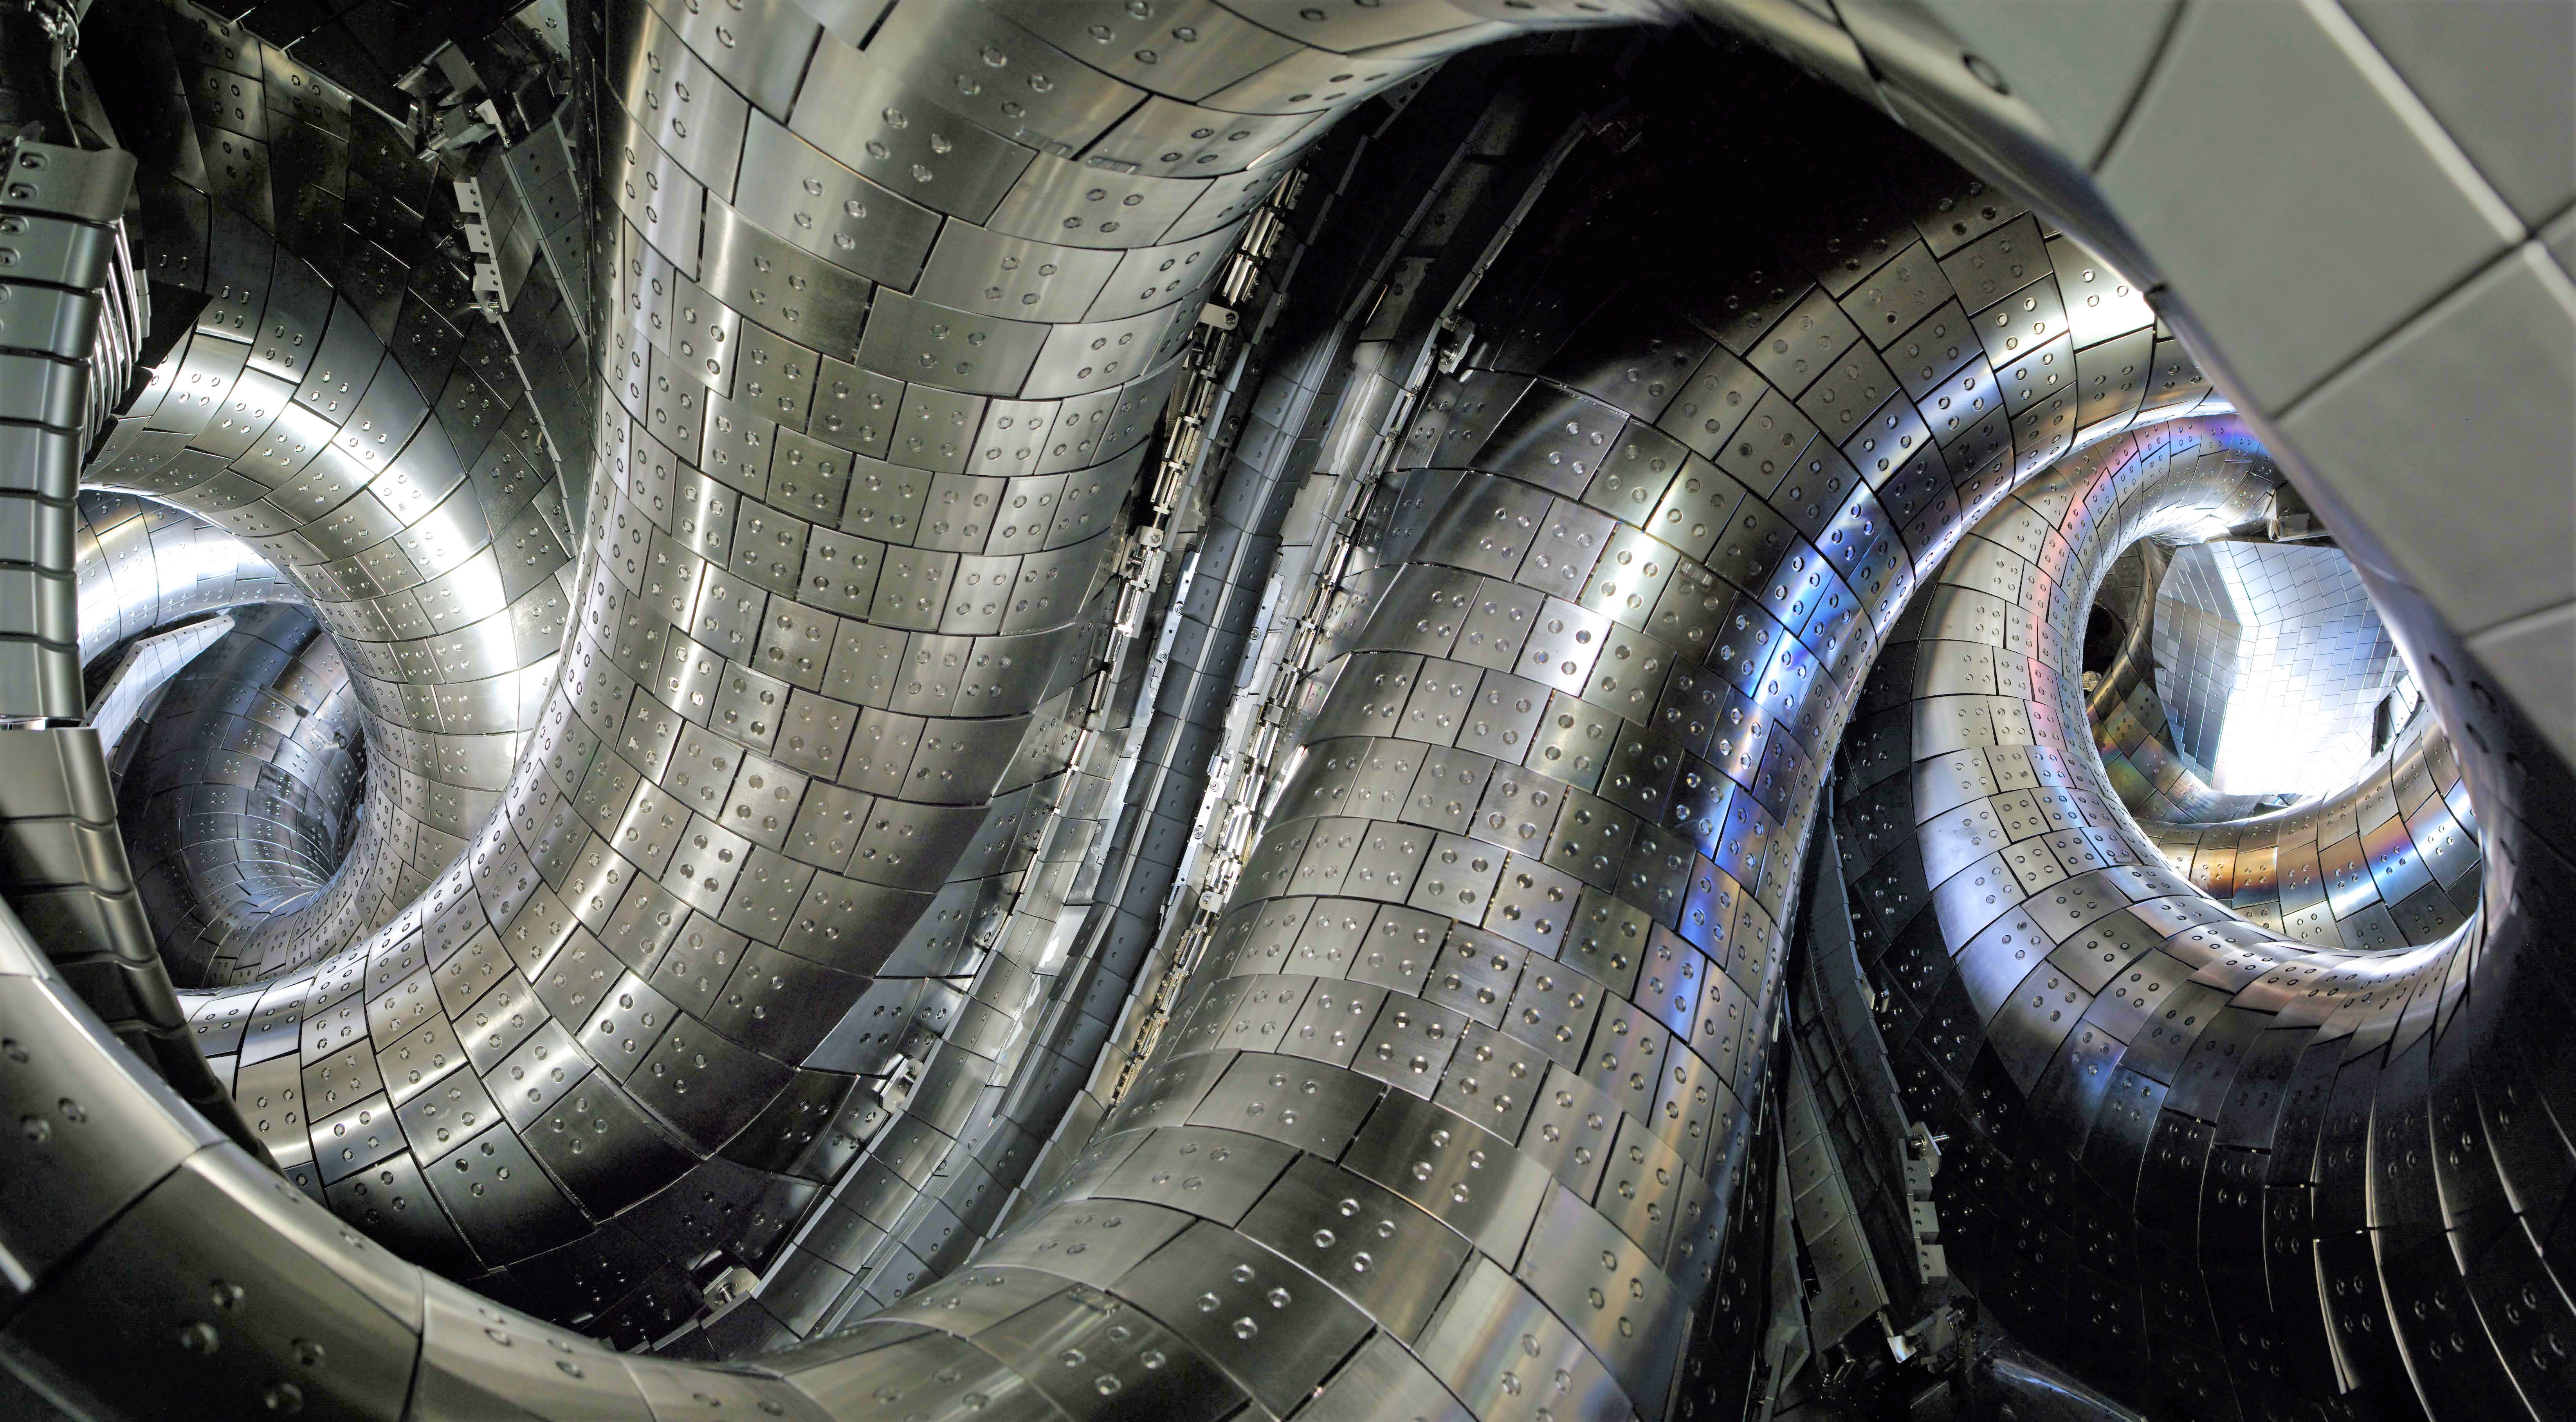 Nuclear fusion experimental equipment